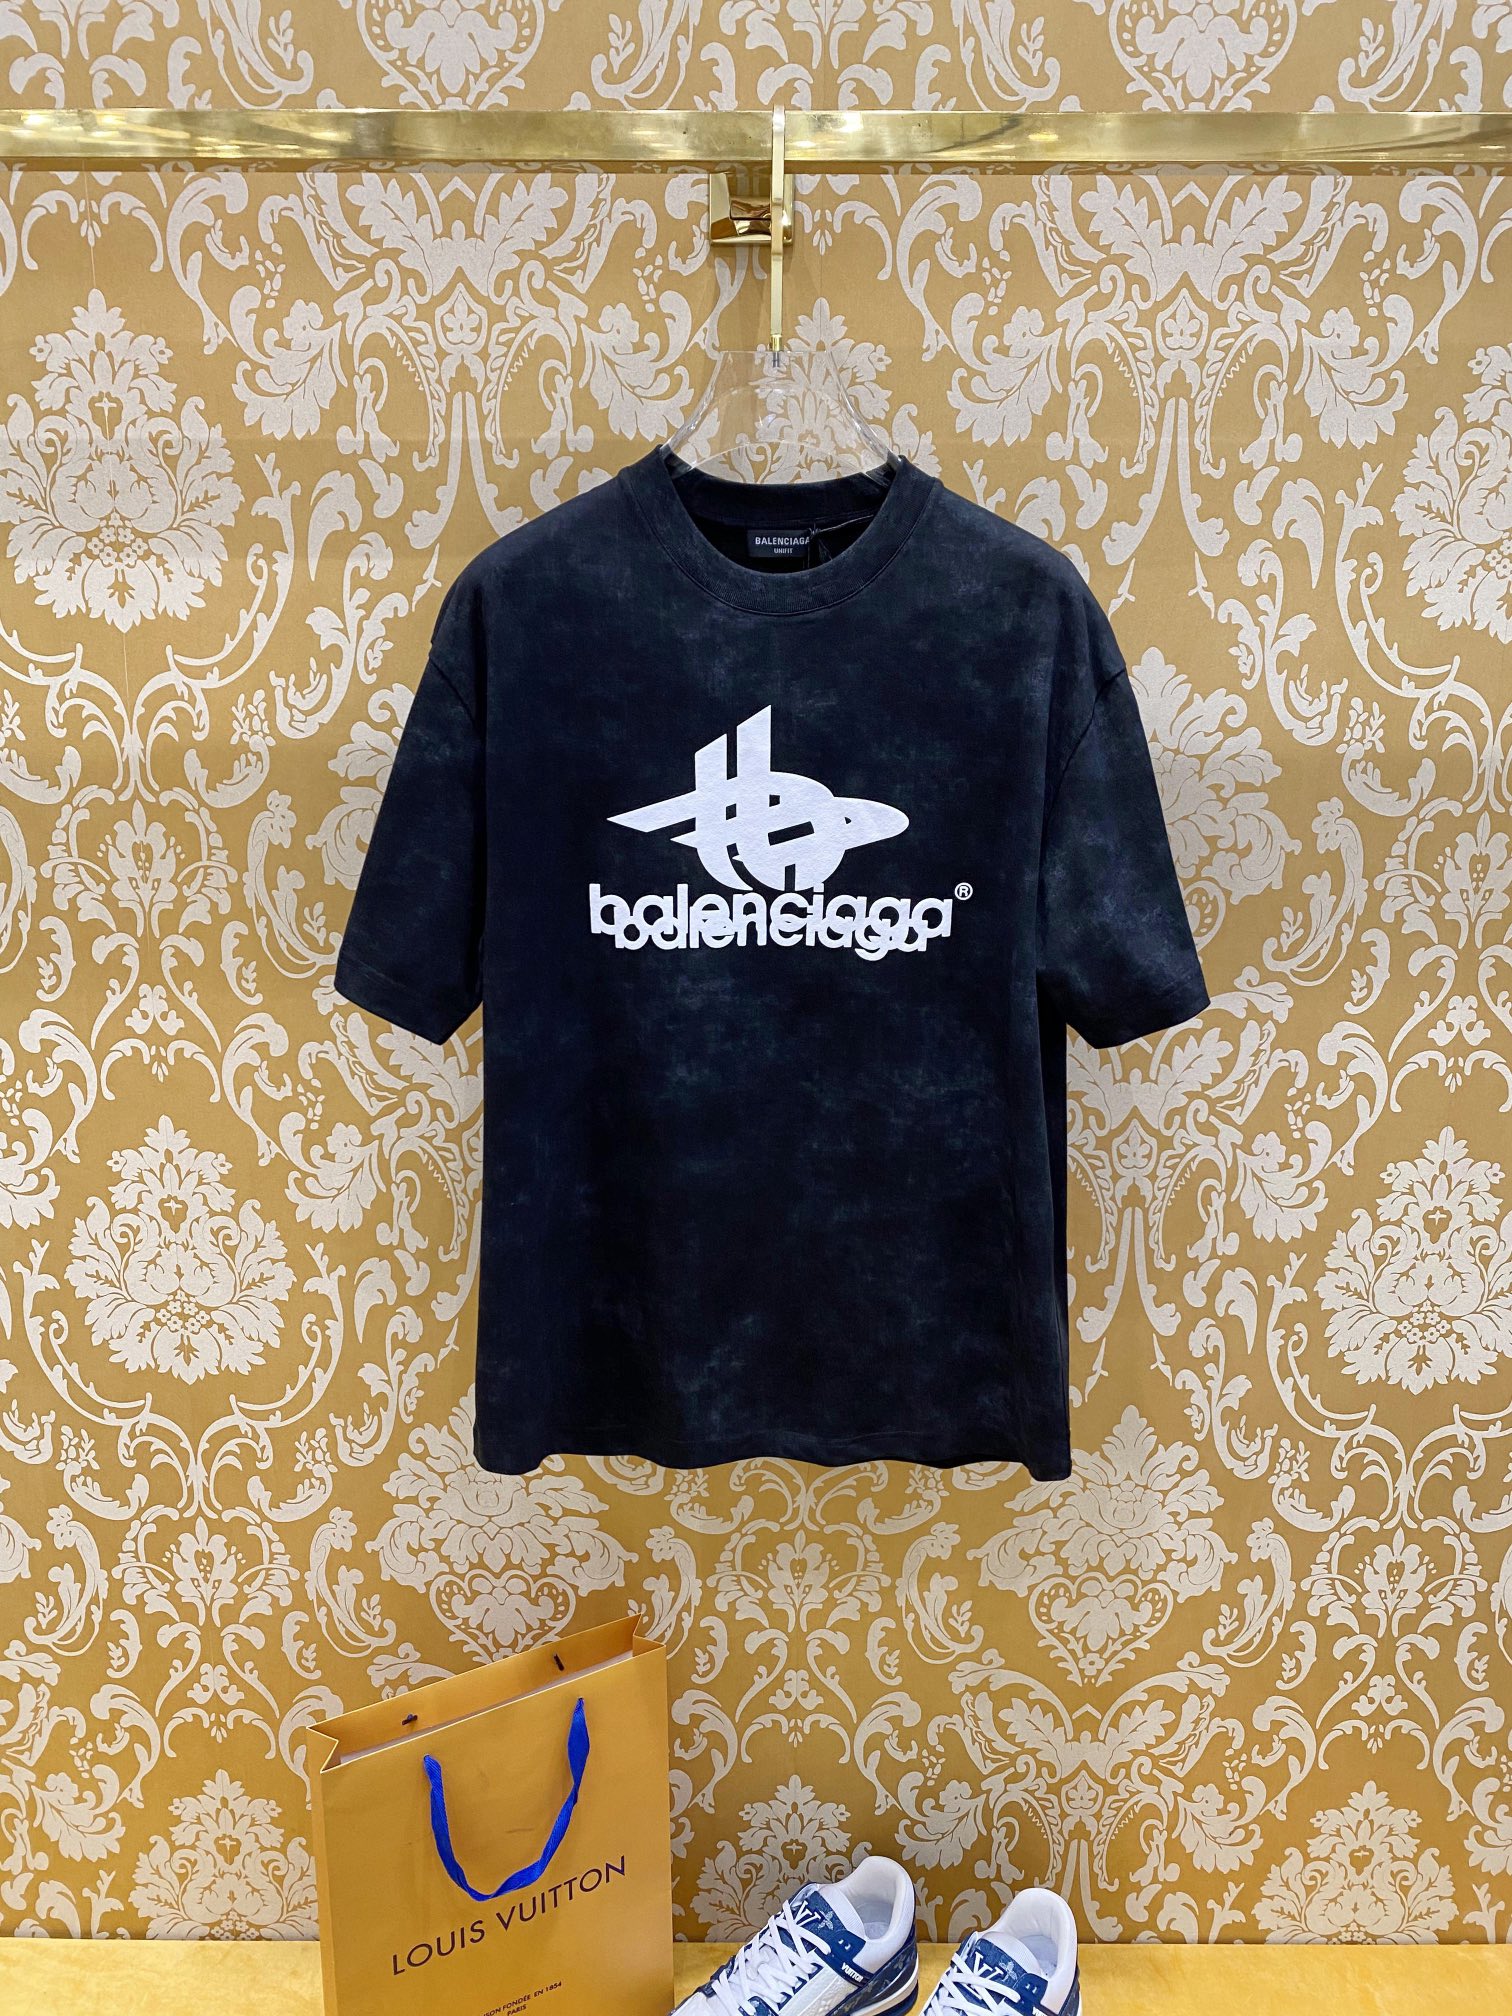 for sale cheap now
 Balenciaga Wholesale
 Clothing T-Shirt Unisex Short Sleeve